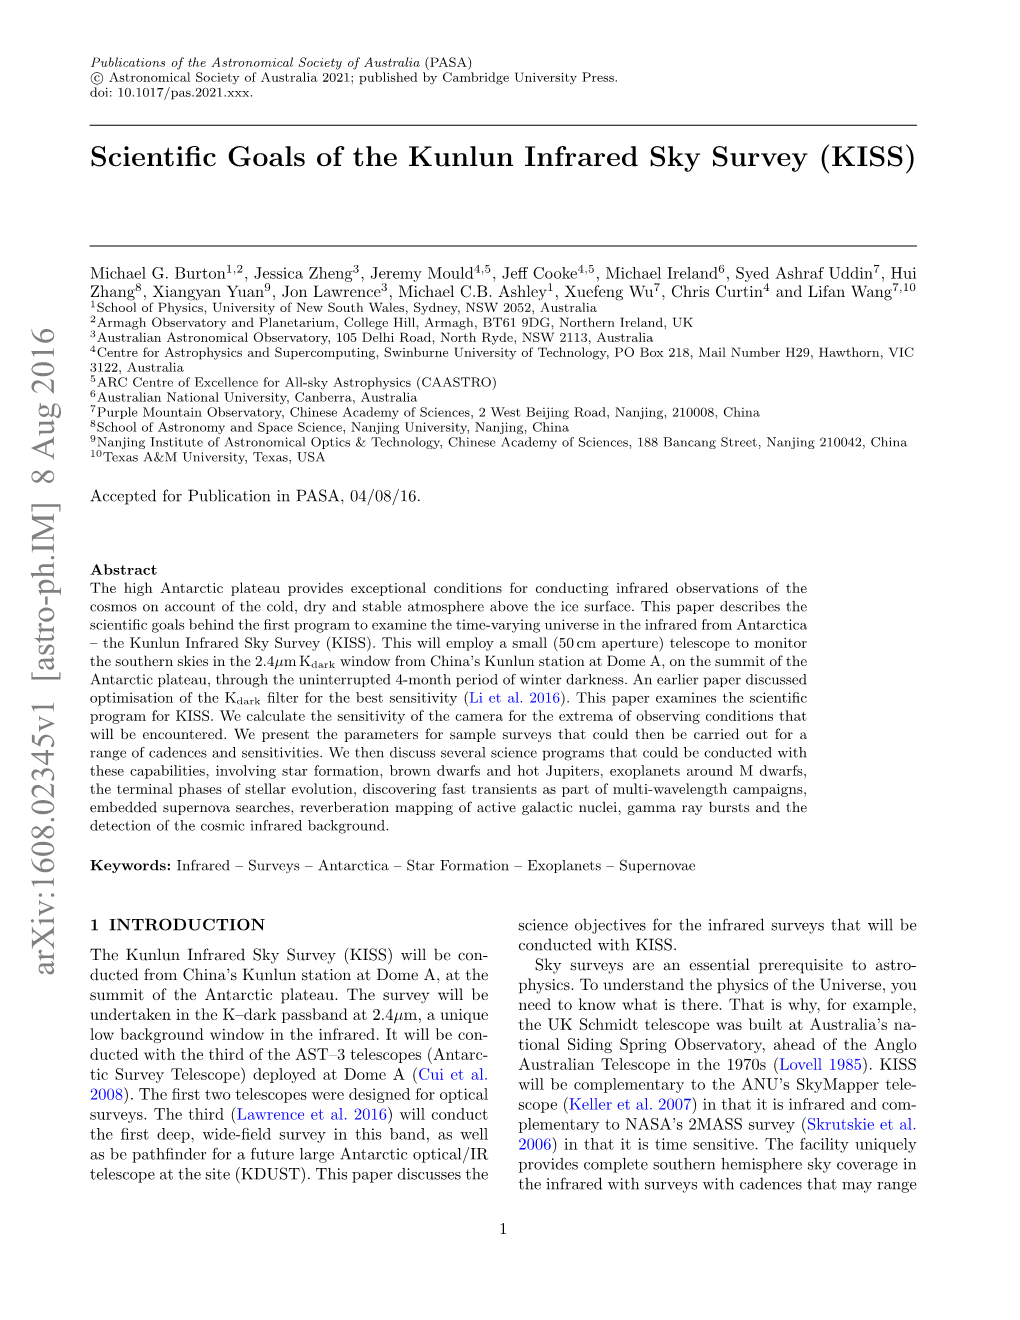 Scientific Goals of the Kunlun Infrared Sky Survey (KISS)